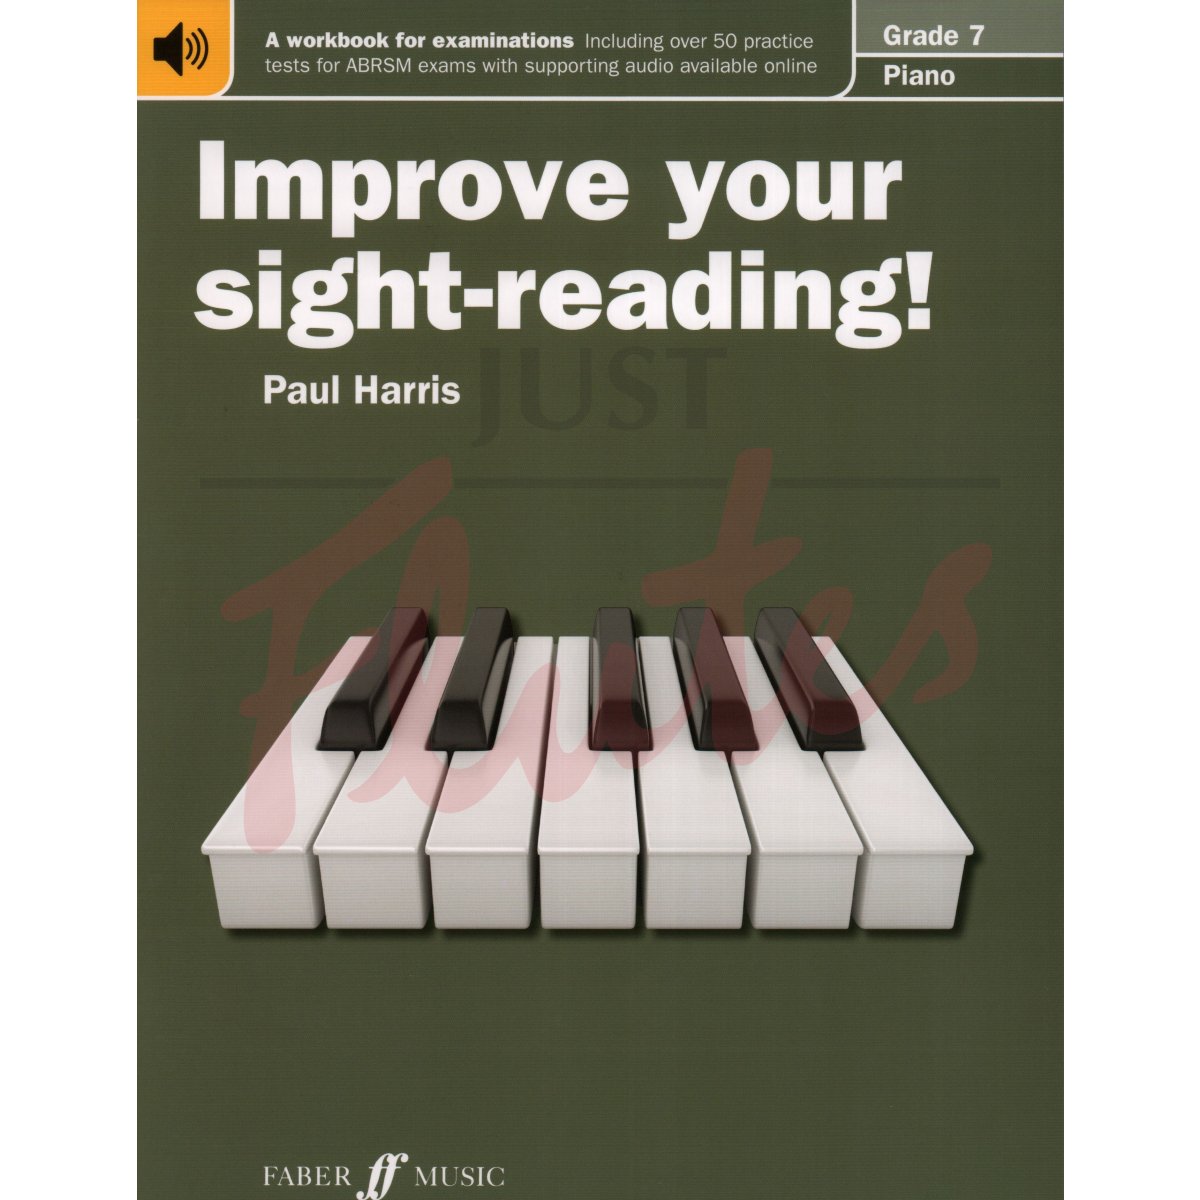 Improve Your Sight-Reading! [Piano] Grade 7